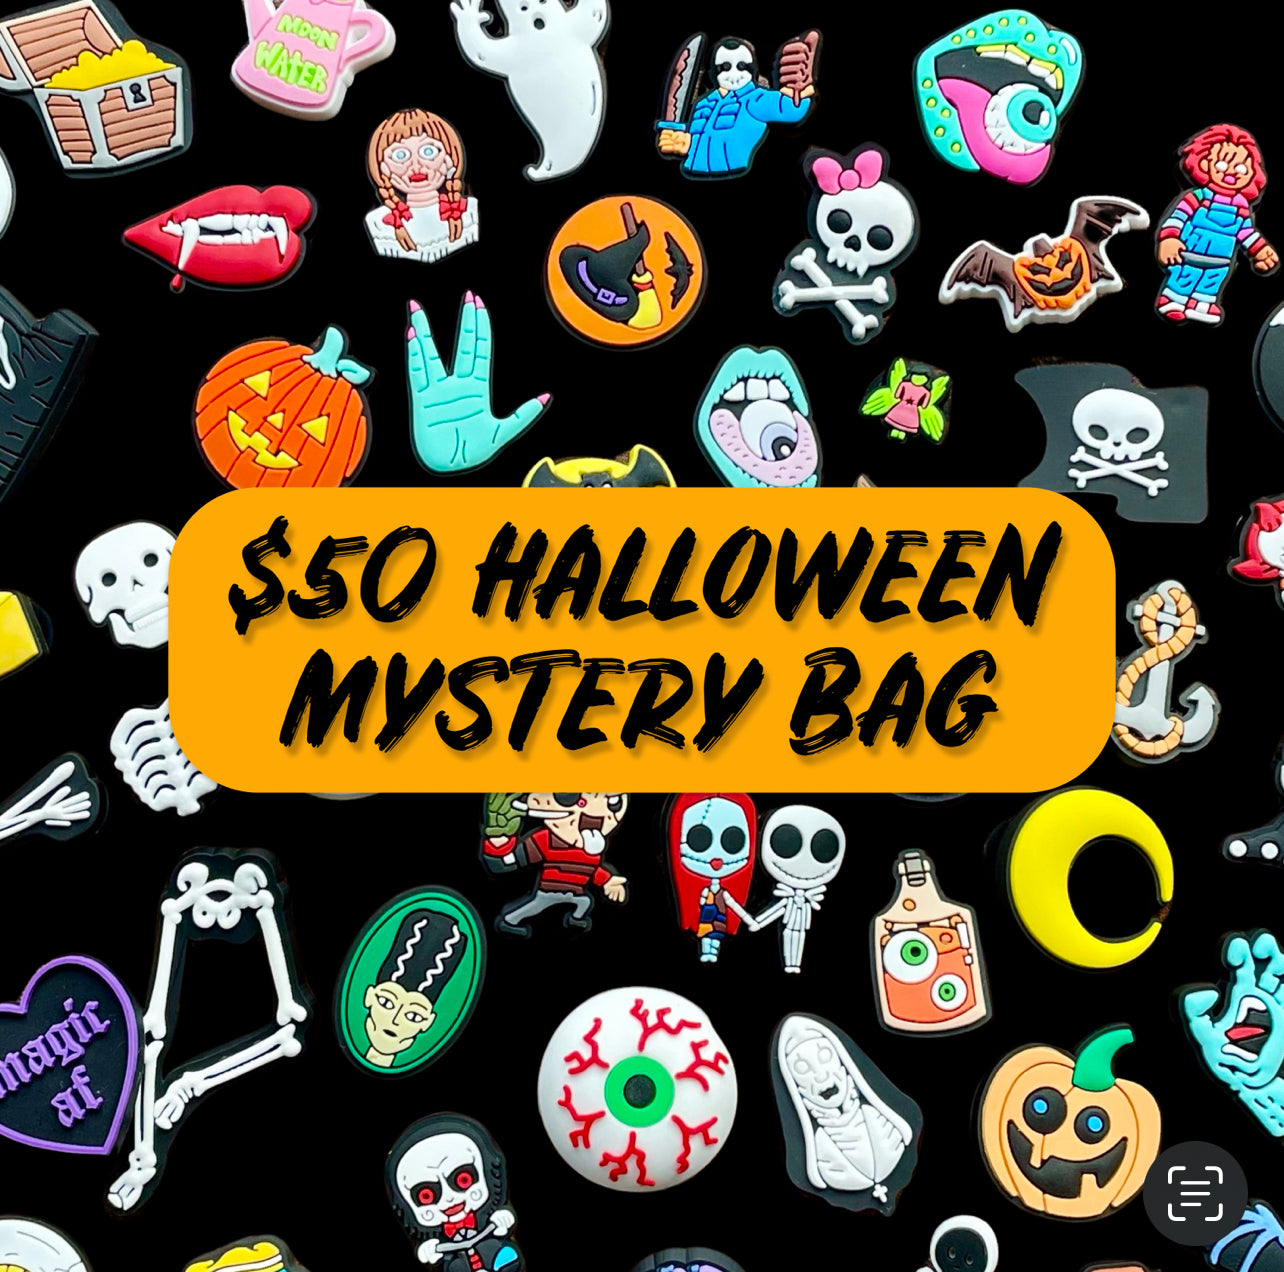 Halloween $50 Mystery Bag